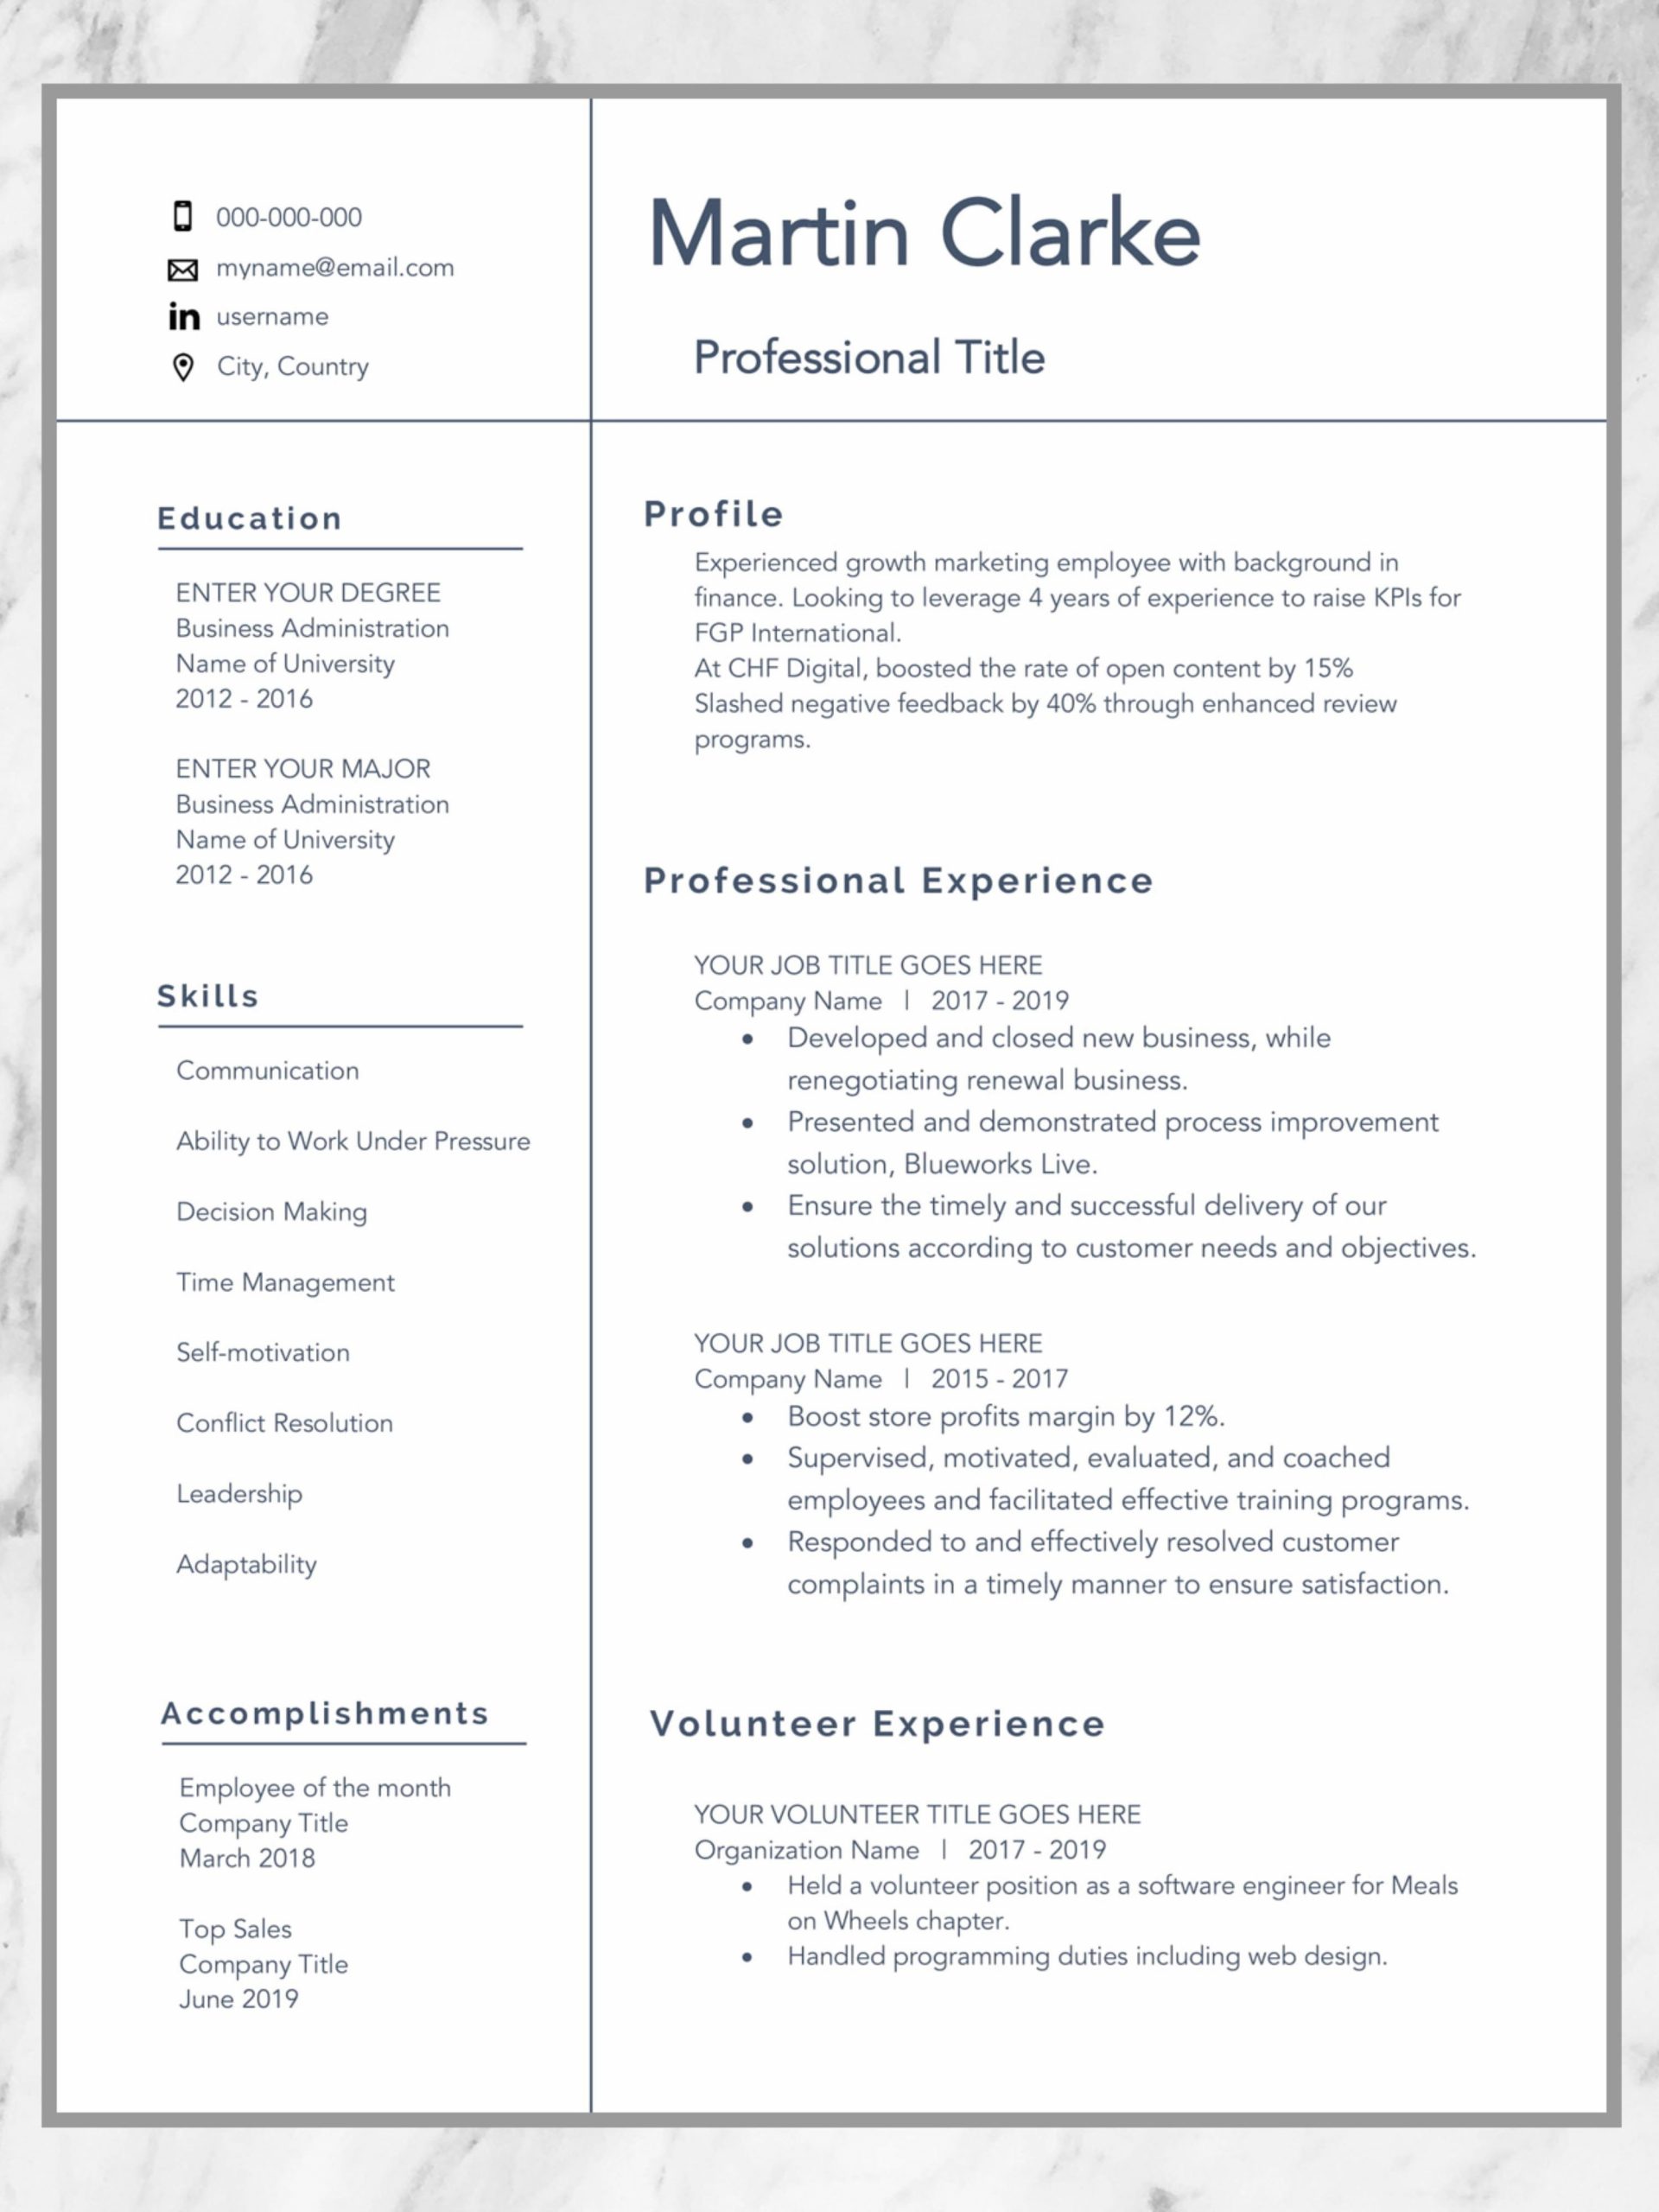 Job Seeker Resume Cv Samples 2019 Resume Template 2019 Professional Resume Executive Resume Etsy …